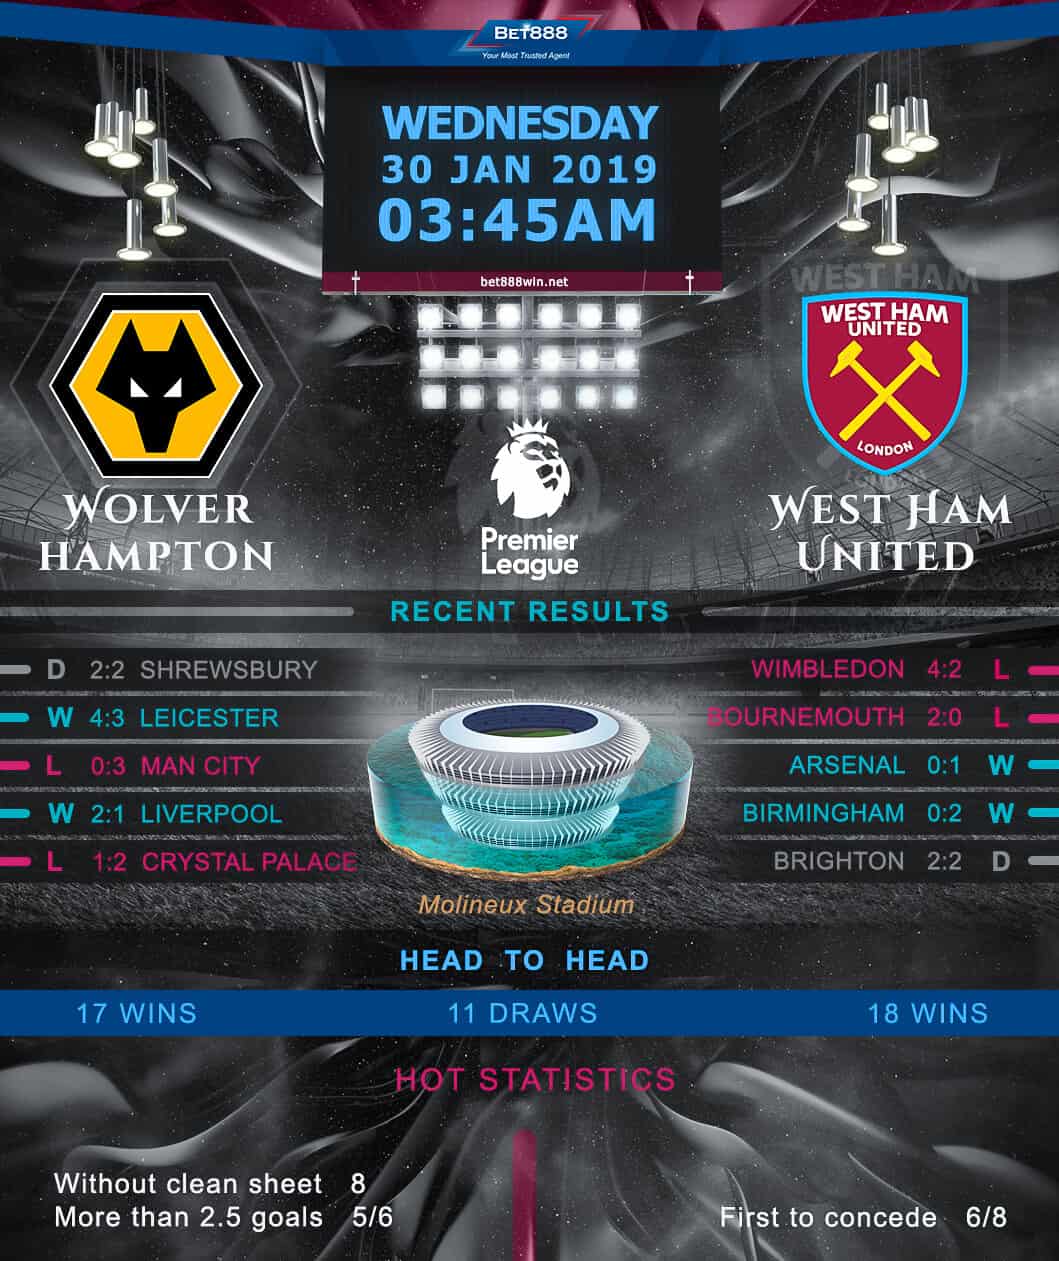 Wolverhampton Wanderers vs West Ham United 30/01/19